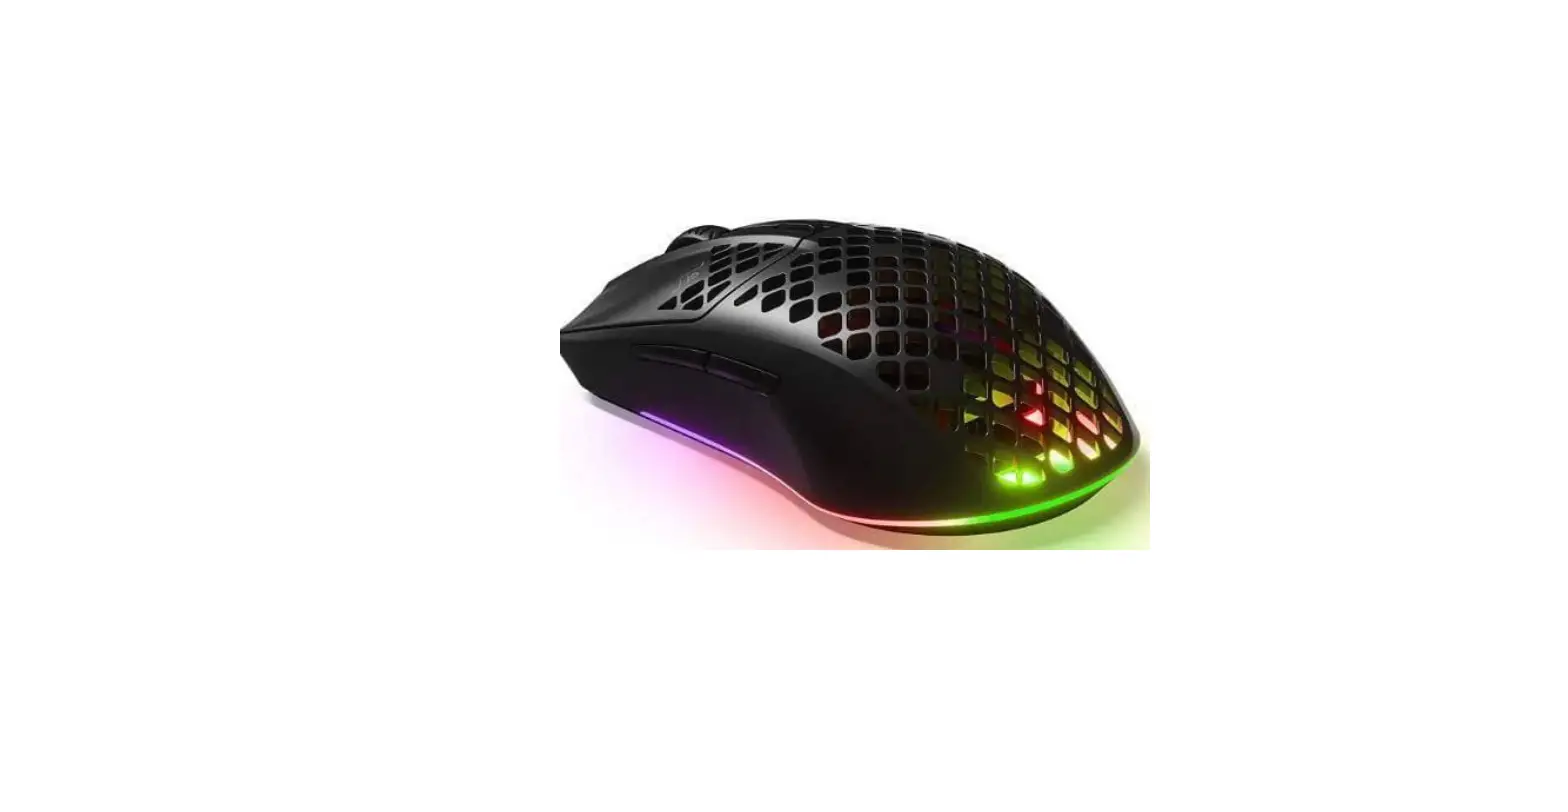 Aerox 3 Ultra Lightweight Gaming Mouse